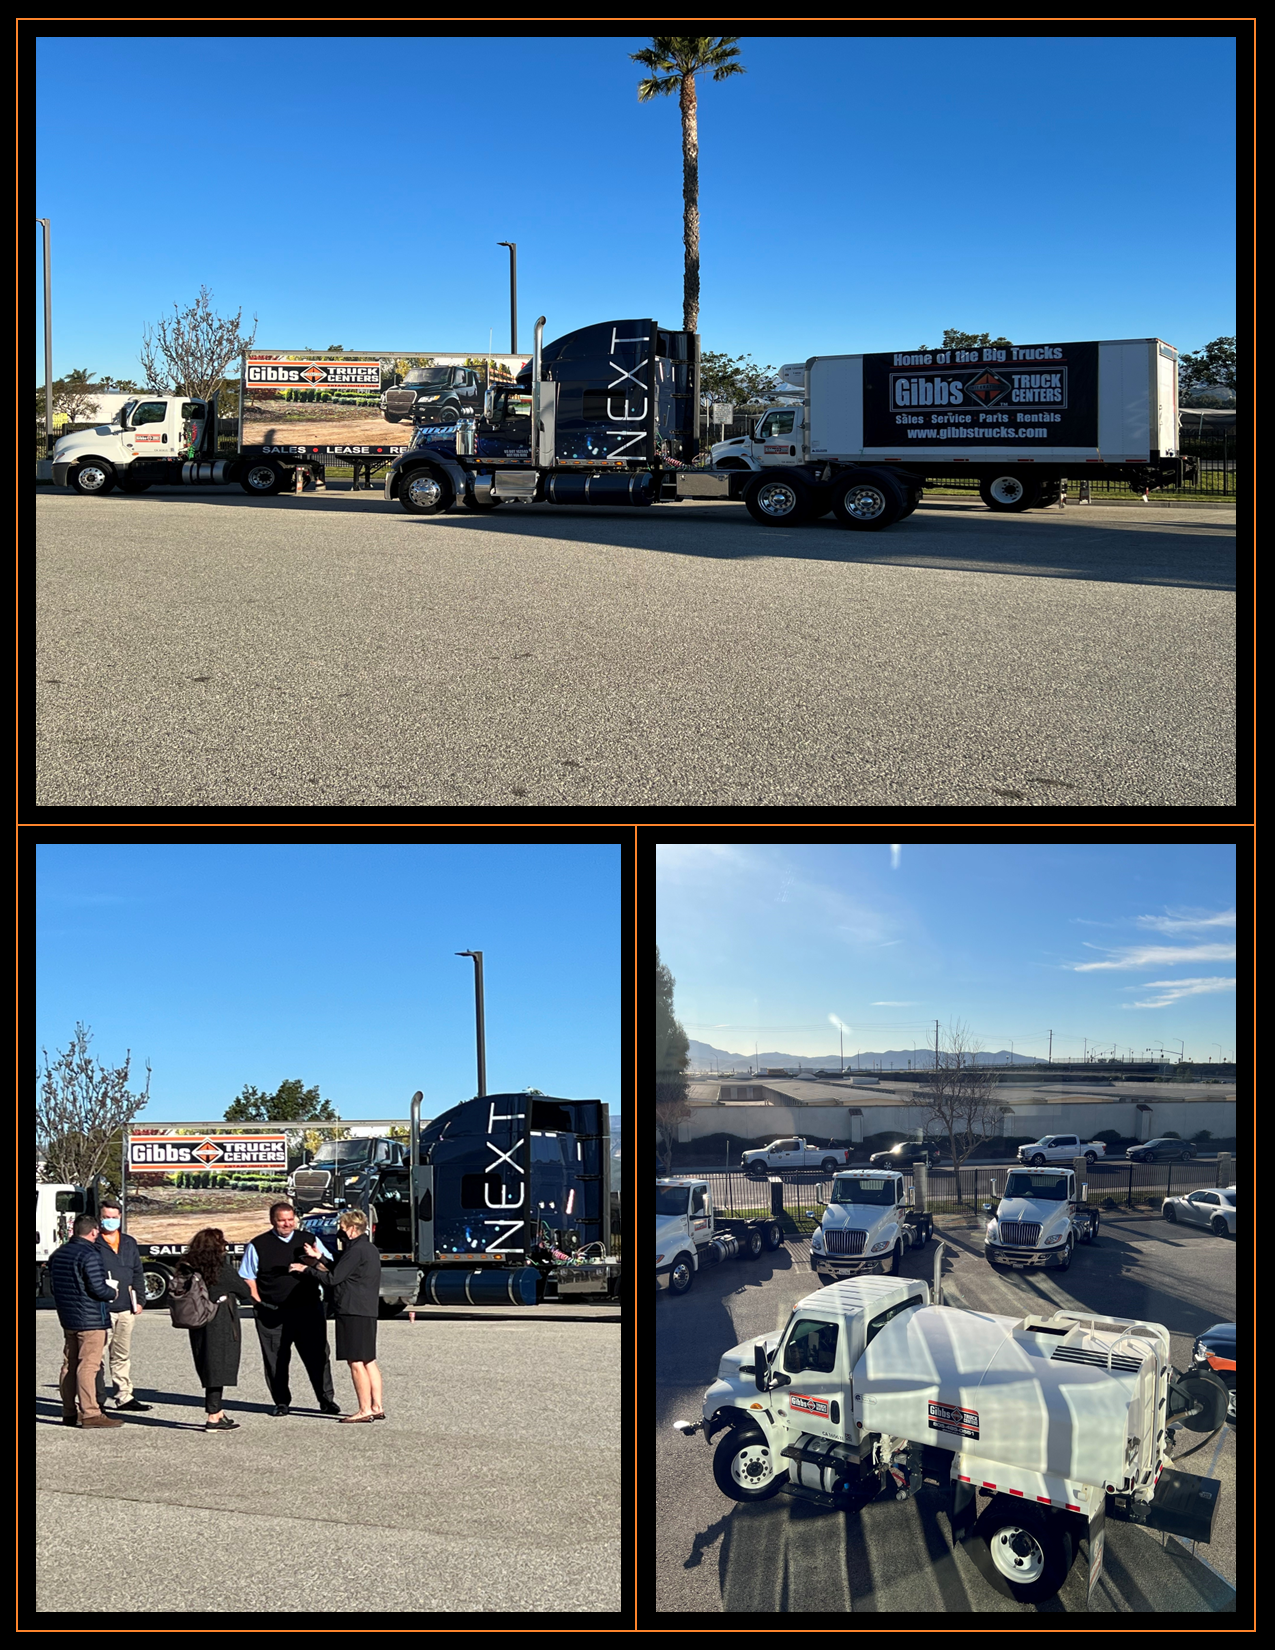 EMV Truck Event Collage